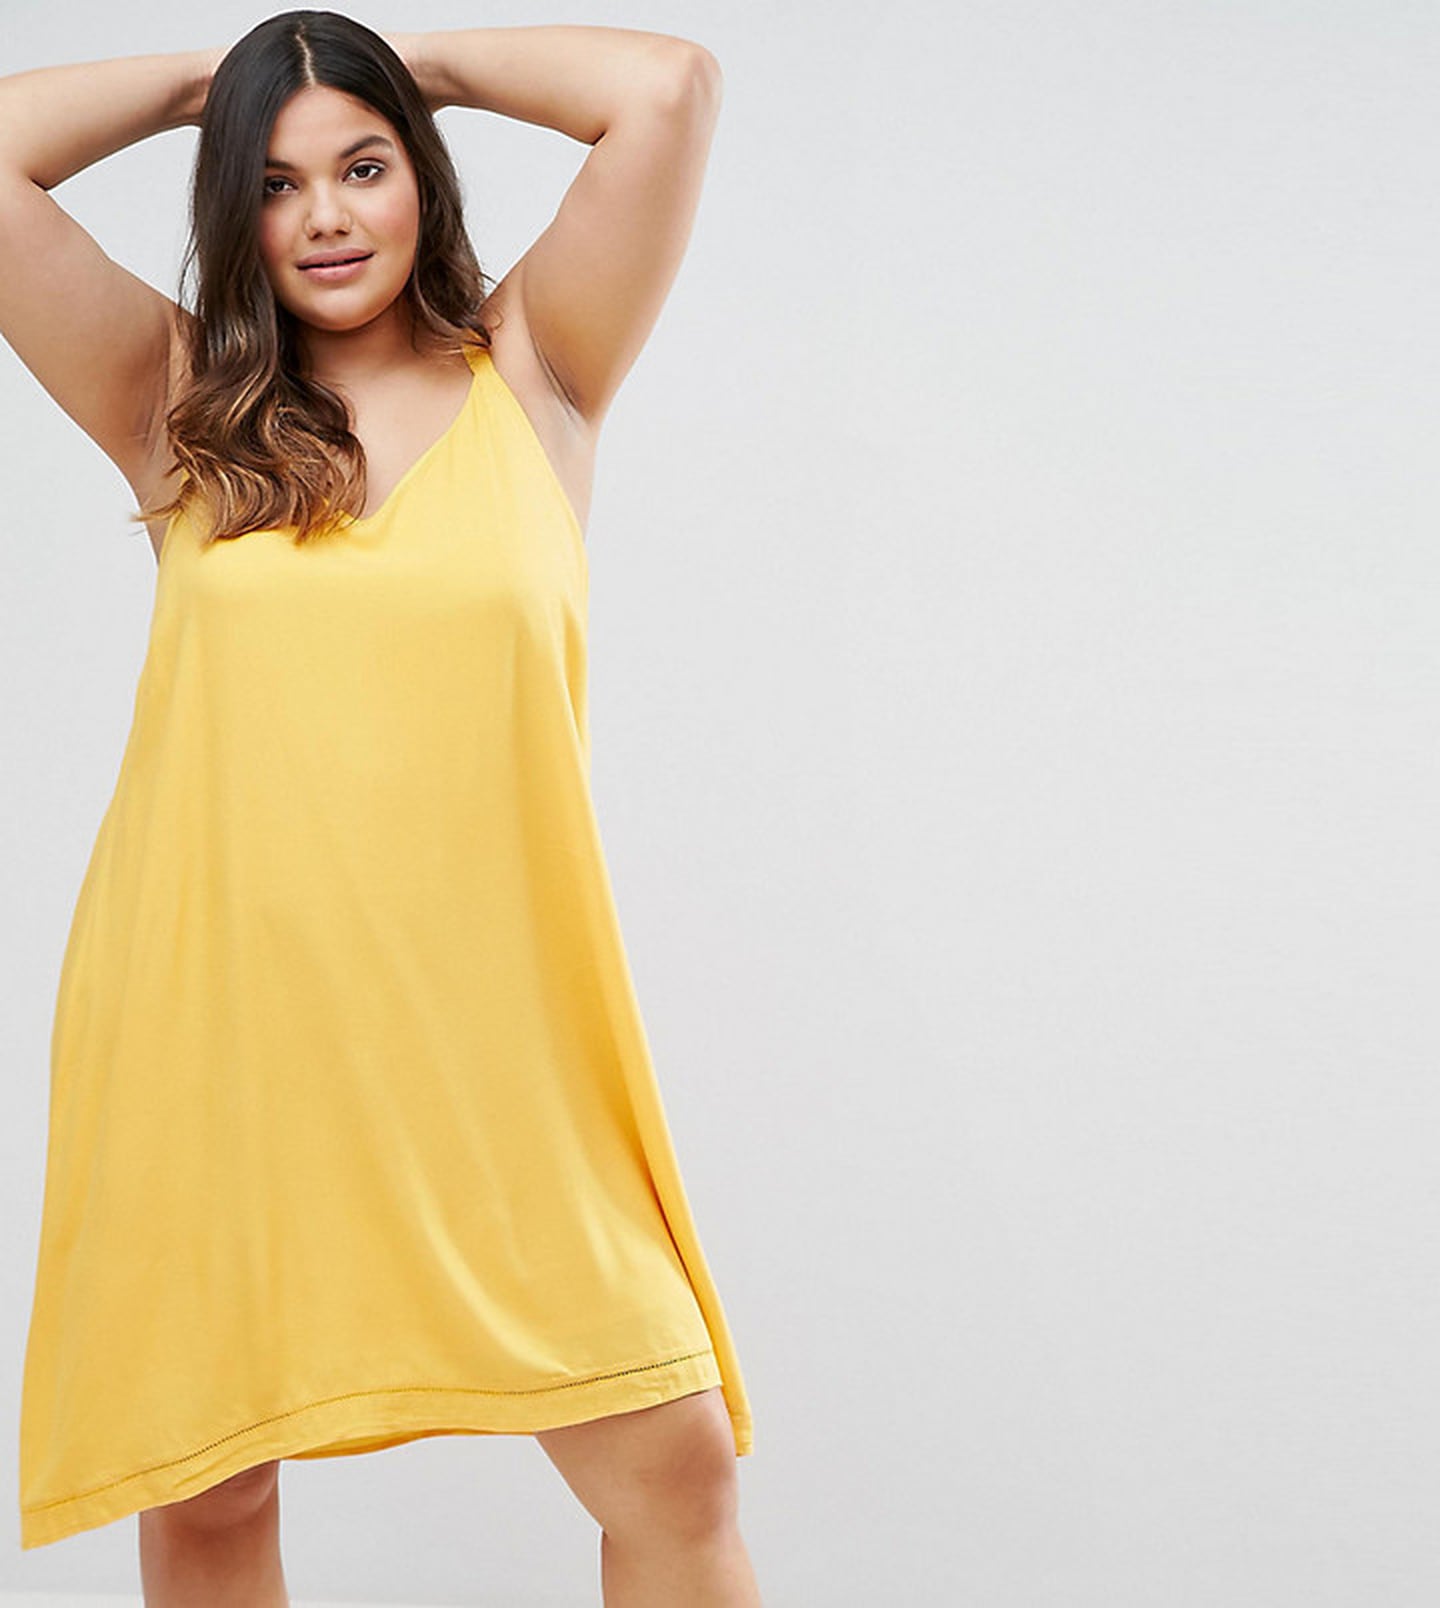 Gigi Hadid Yellow Ralph Lauren Dress | POPSUGAR Fashion